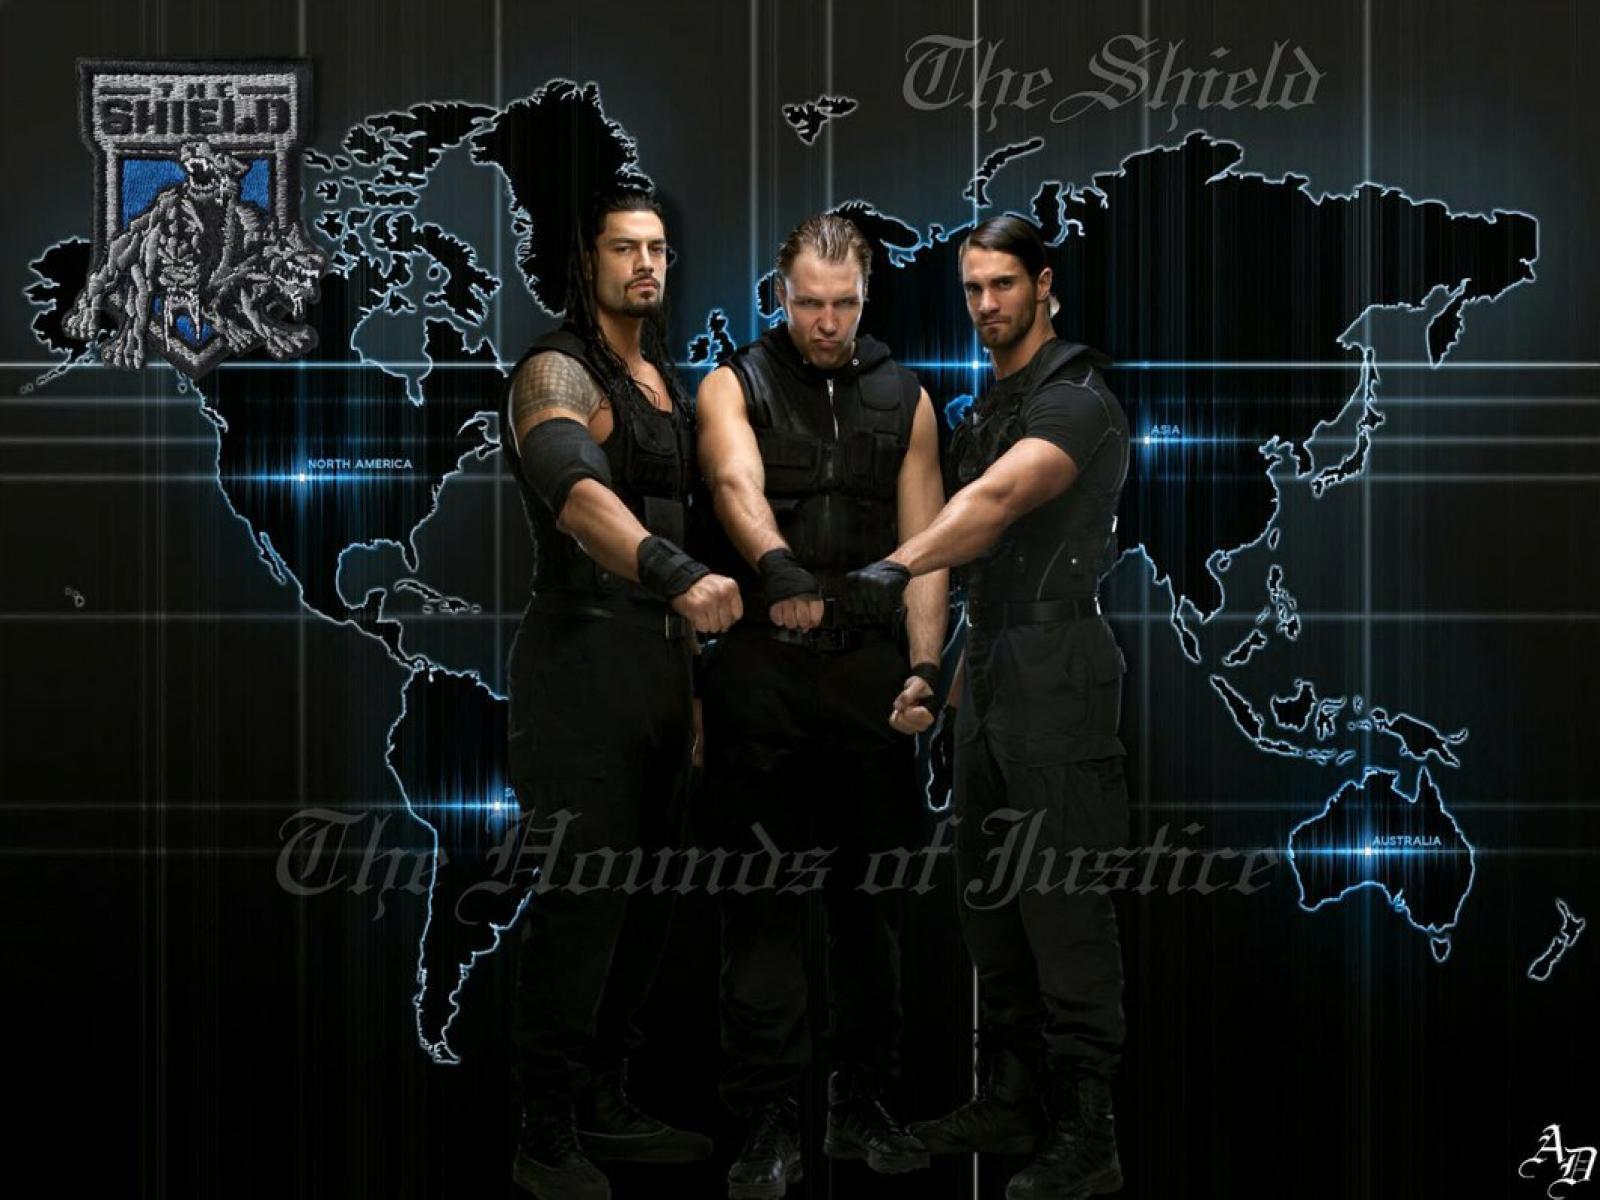 WWE Shield Logo Wallpapers - Wallpaper Cave